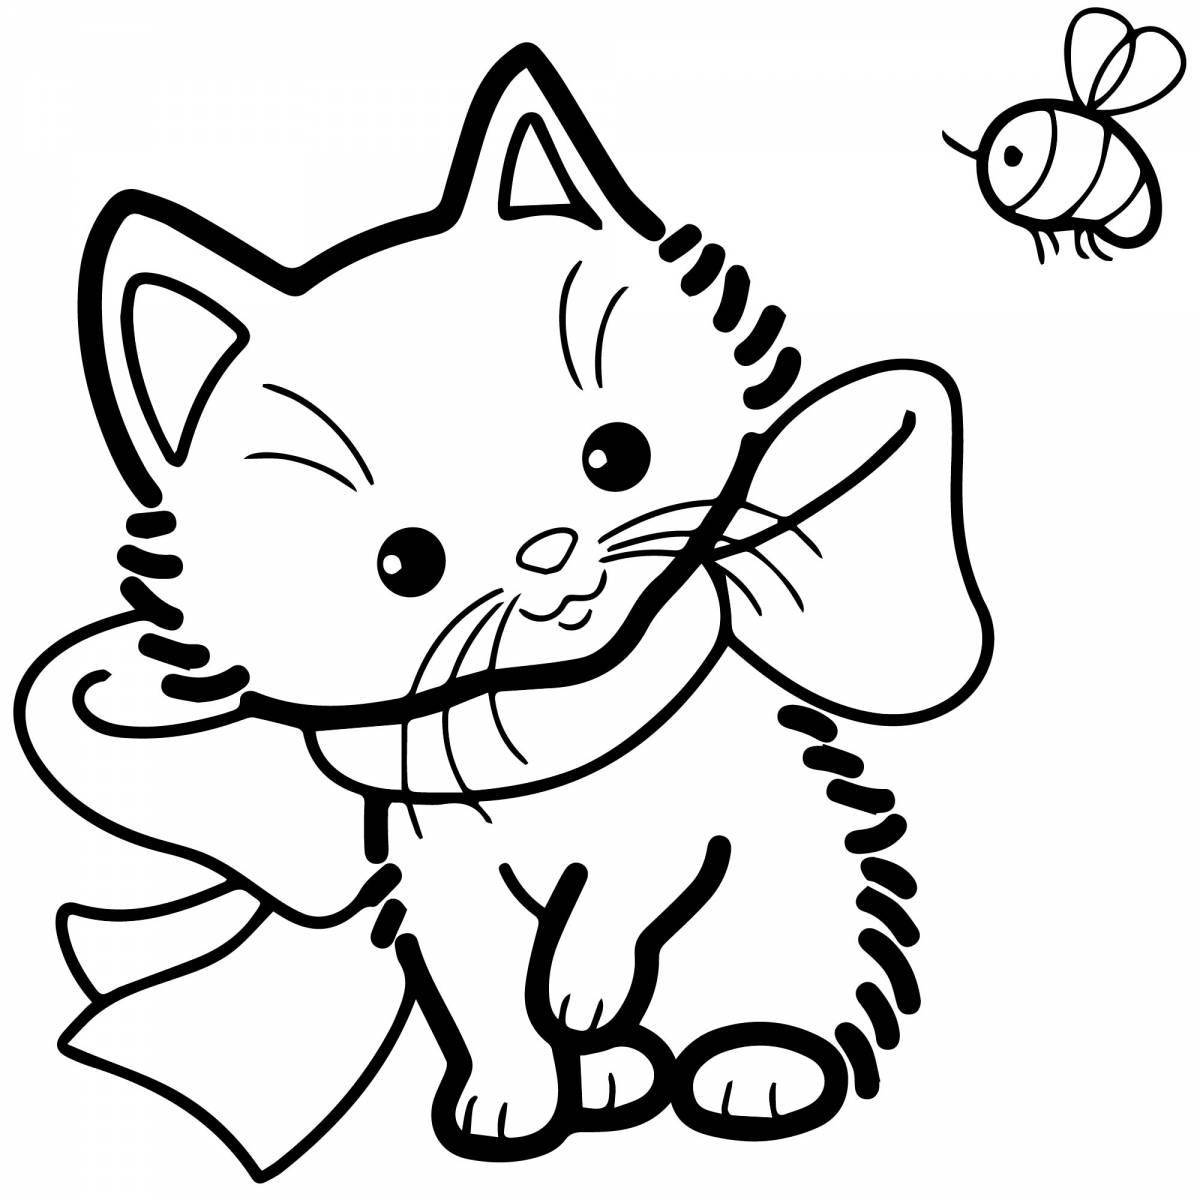 Fancy little kittens coloring page